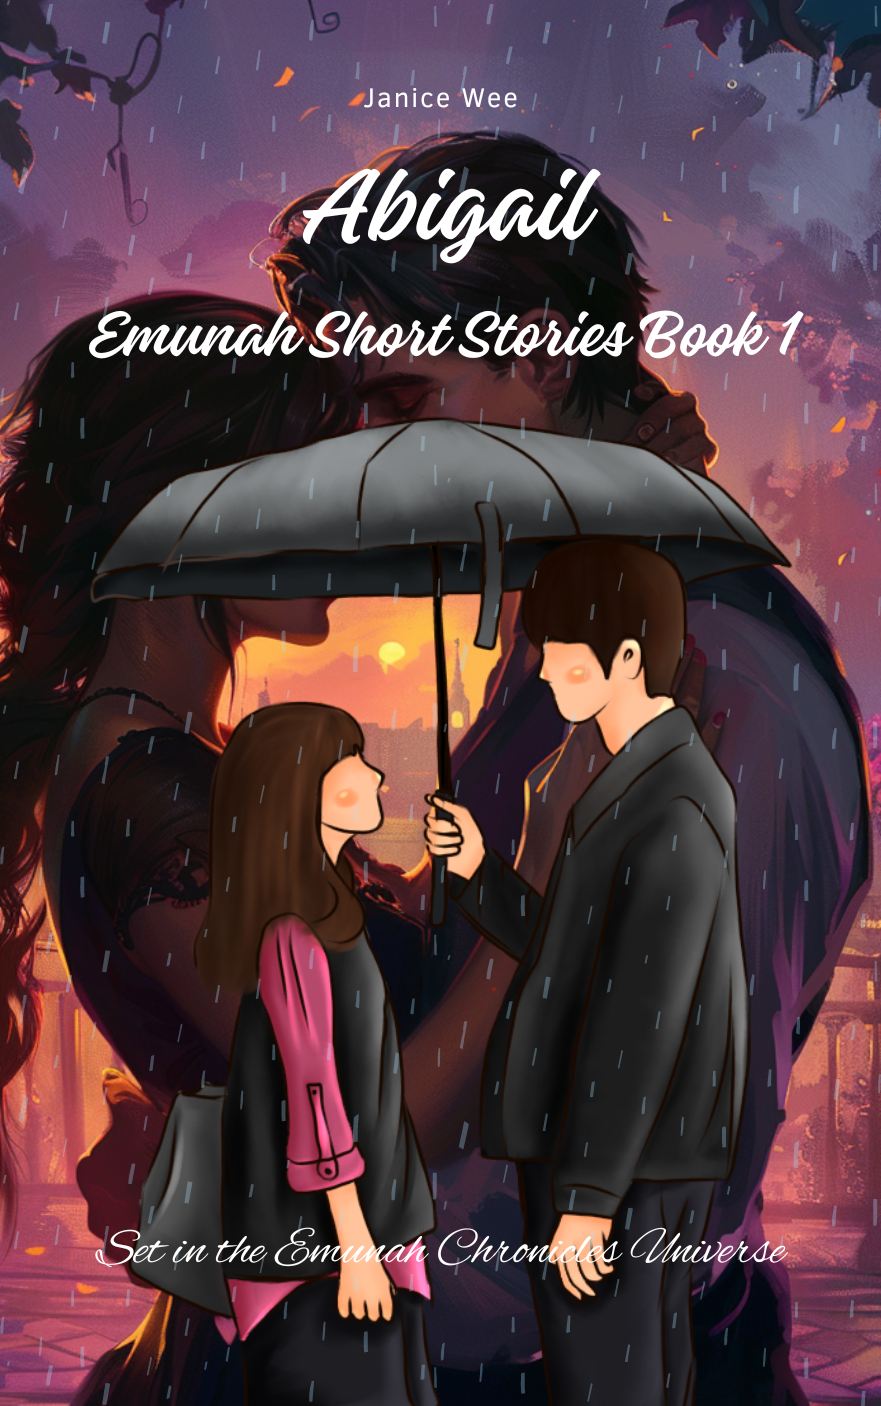 Emunah Short Stories Book 1 Abigail